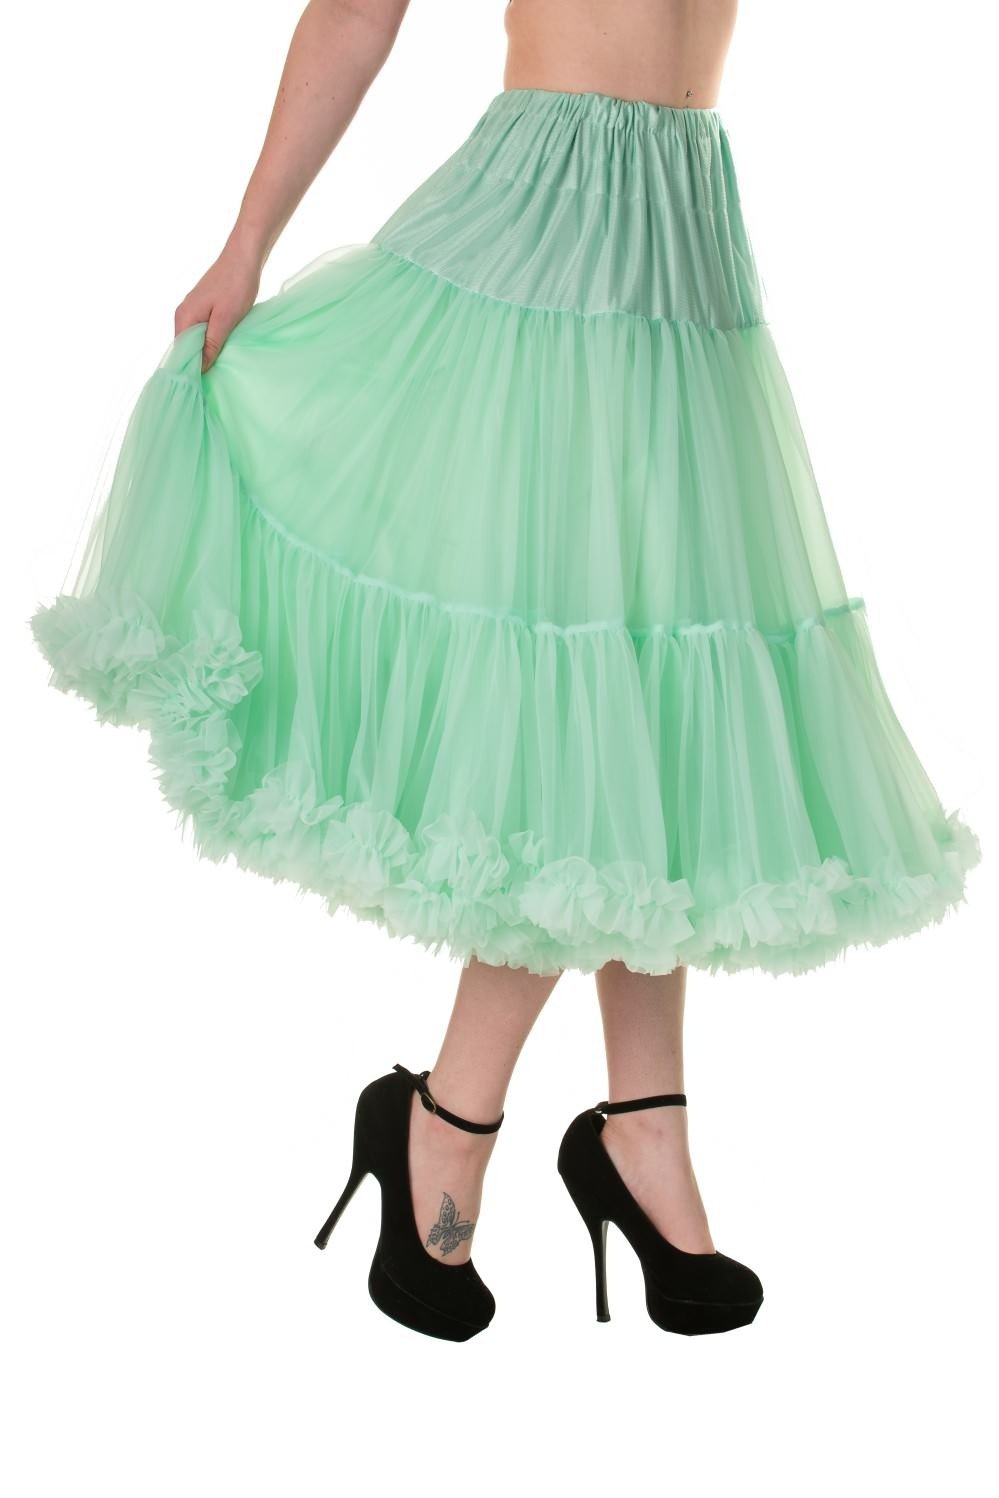 Vintage Style Fluffy Petticoat - Rockamilly-Petticoats-Vintage